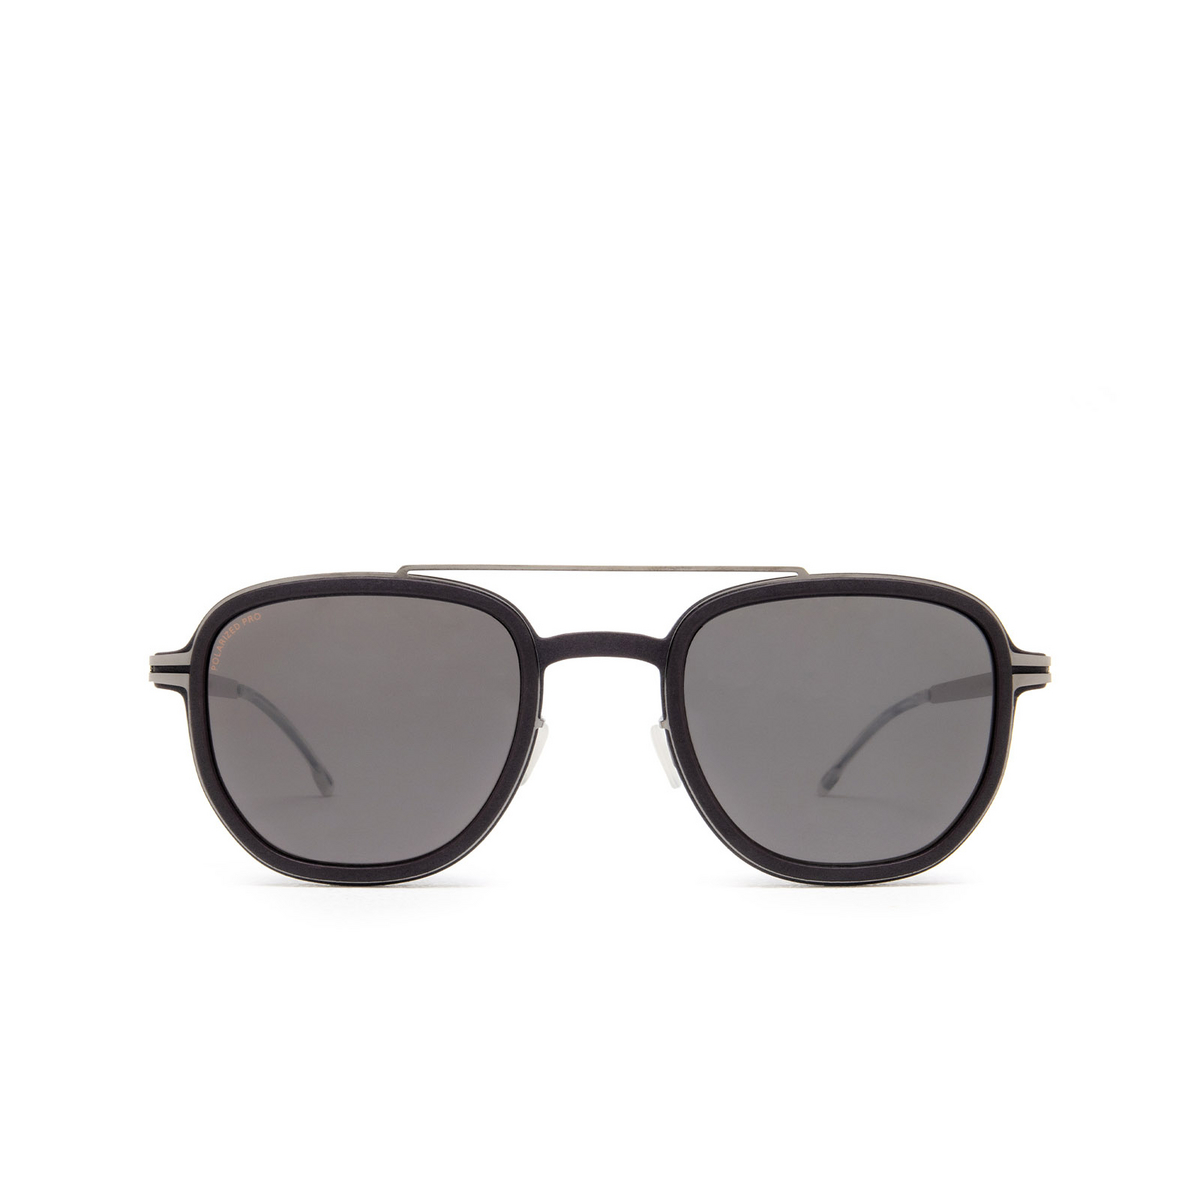 Mykita ALDER Sunglasses 559 MH60 Slate Grey/Shiny Graphite - front view